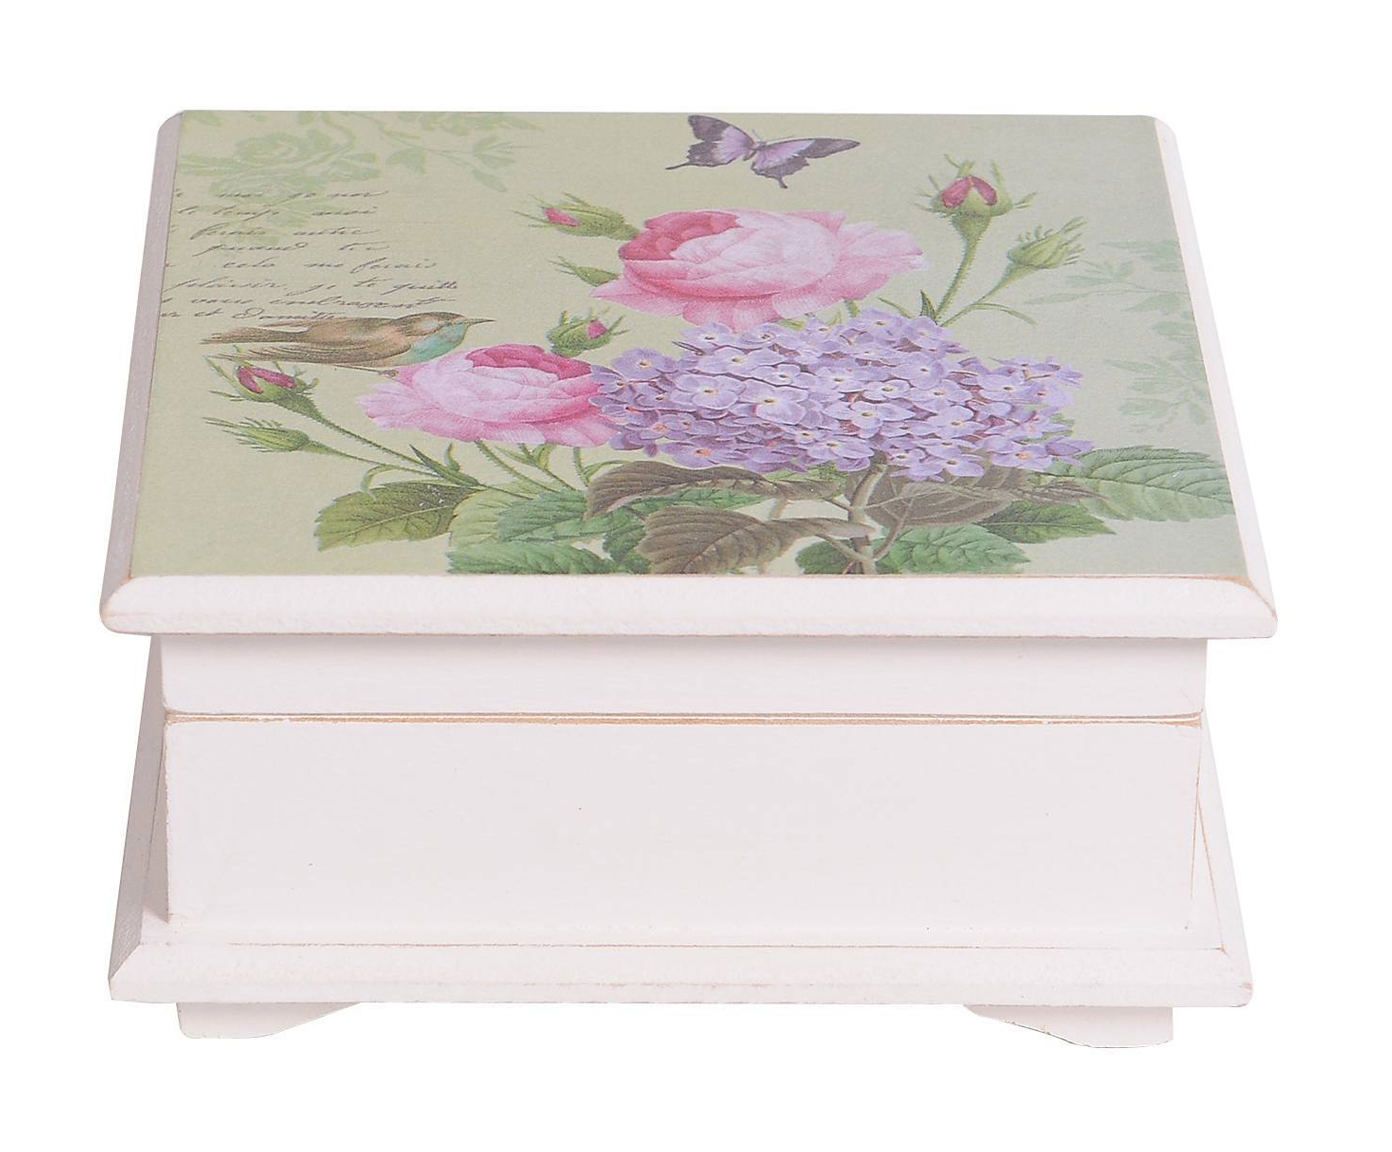 Porta-joia provance lilac - 20 x 20 cm | Westwing.com.br